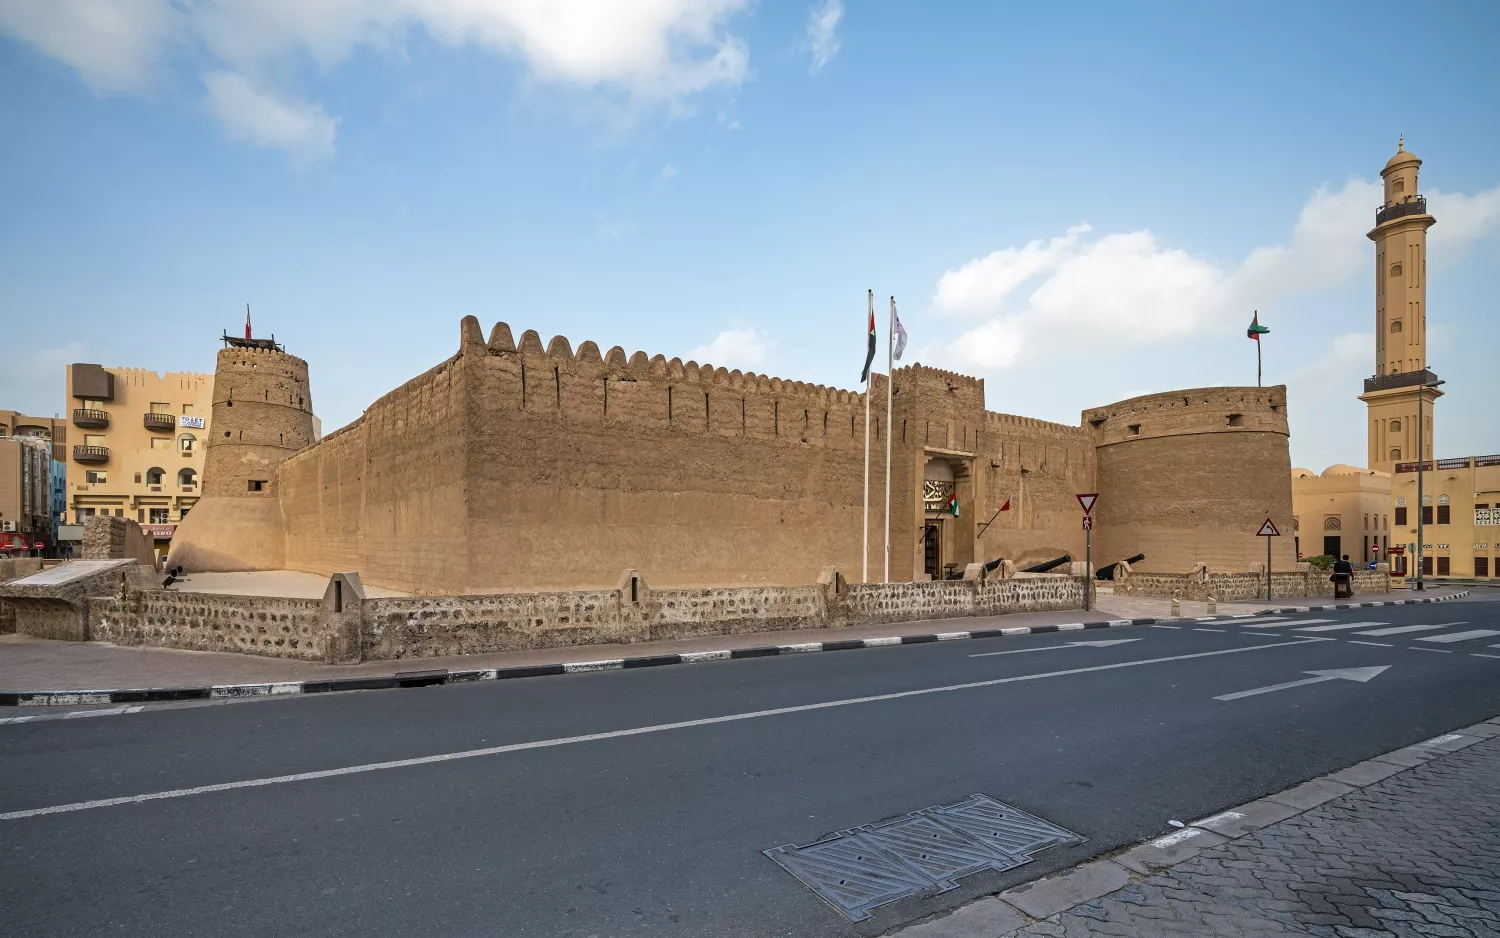 Al Fahidi Fort - Dubai Museum - Dubai - United Arab Emirates